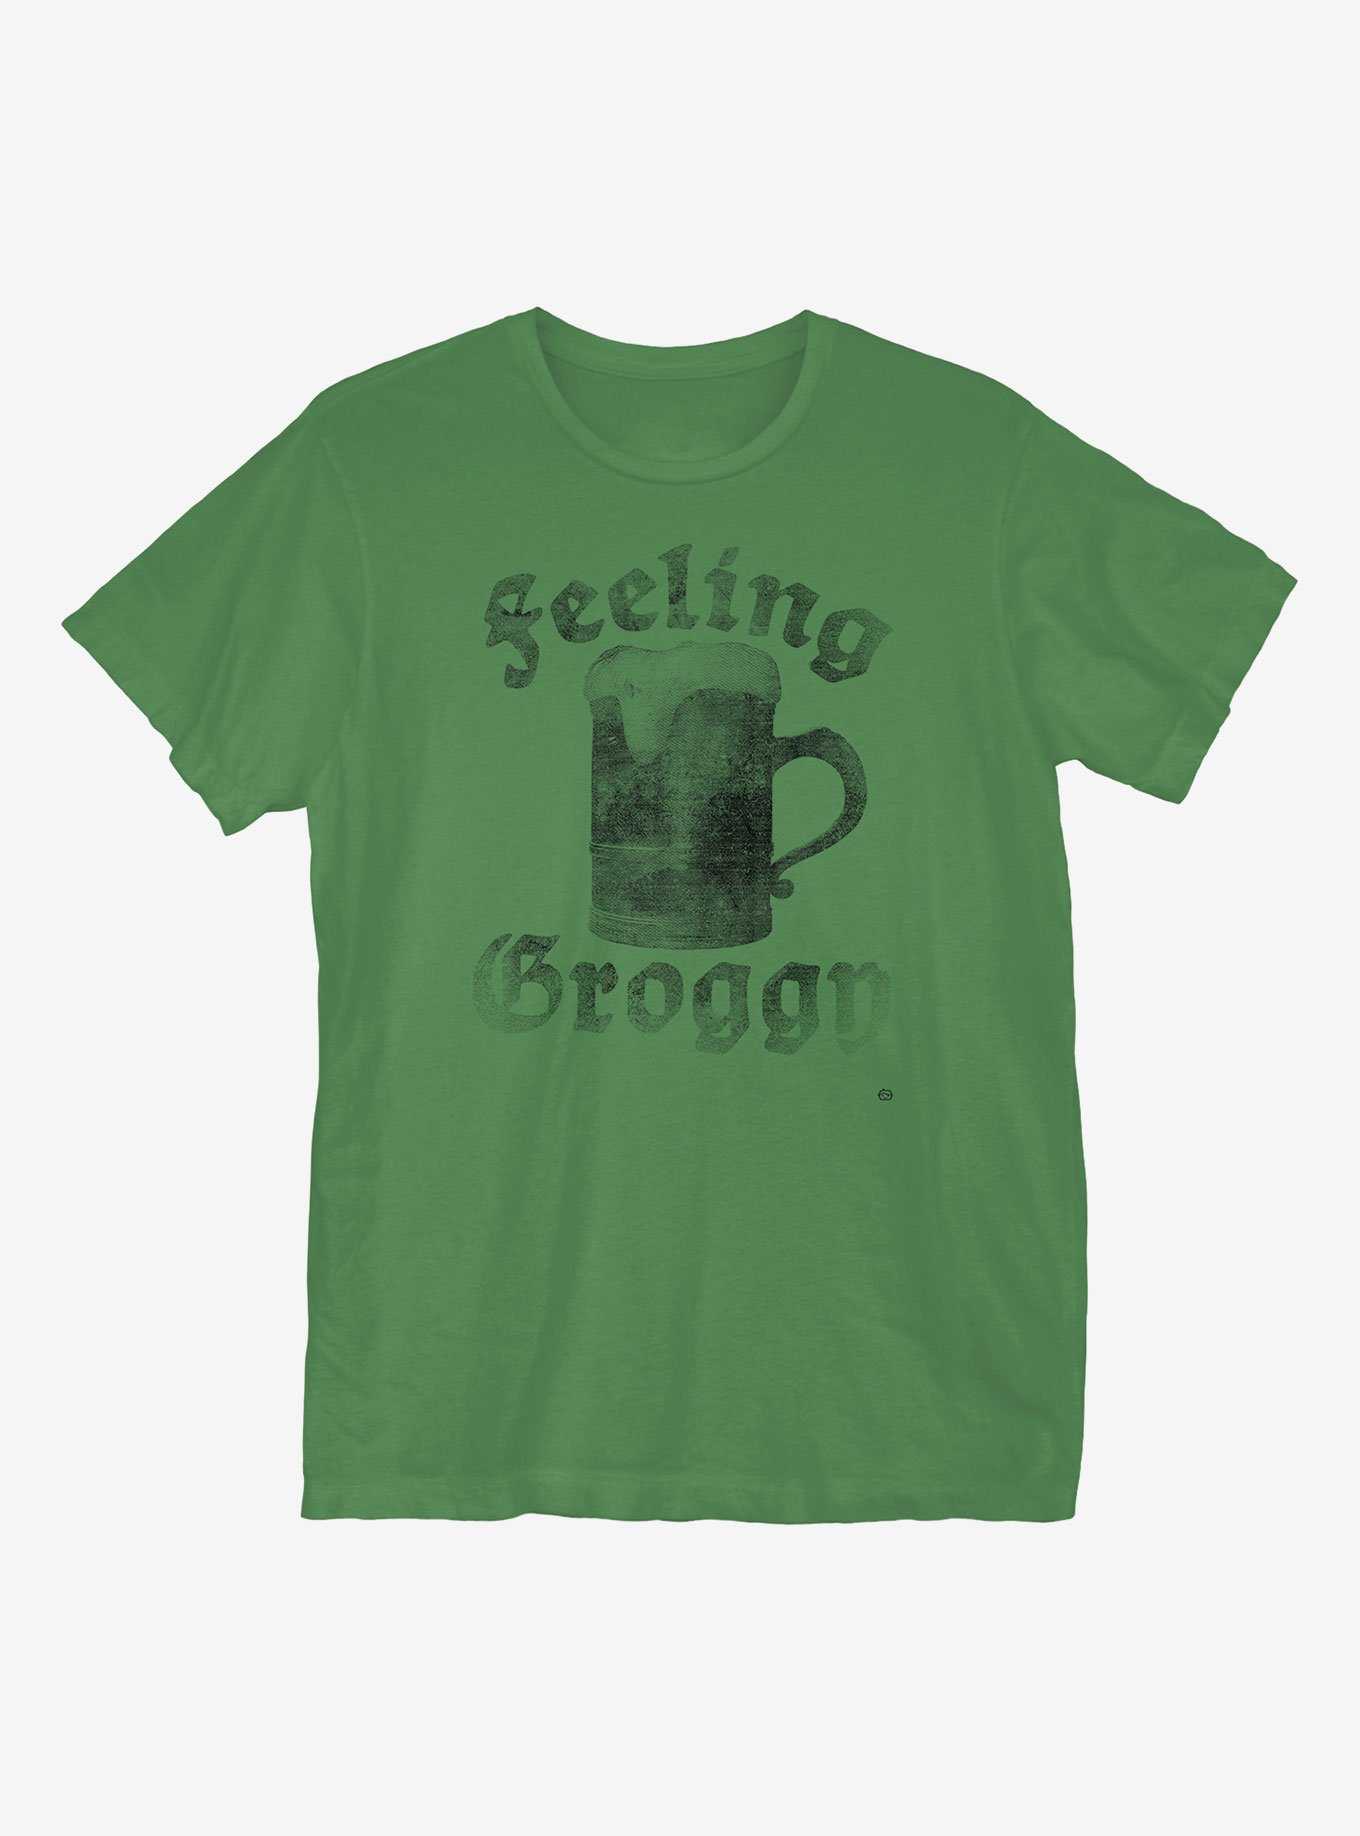 Feeling Groggy T-Shirt, , hi-res